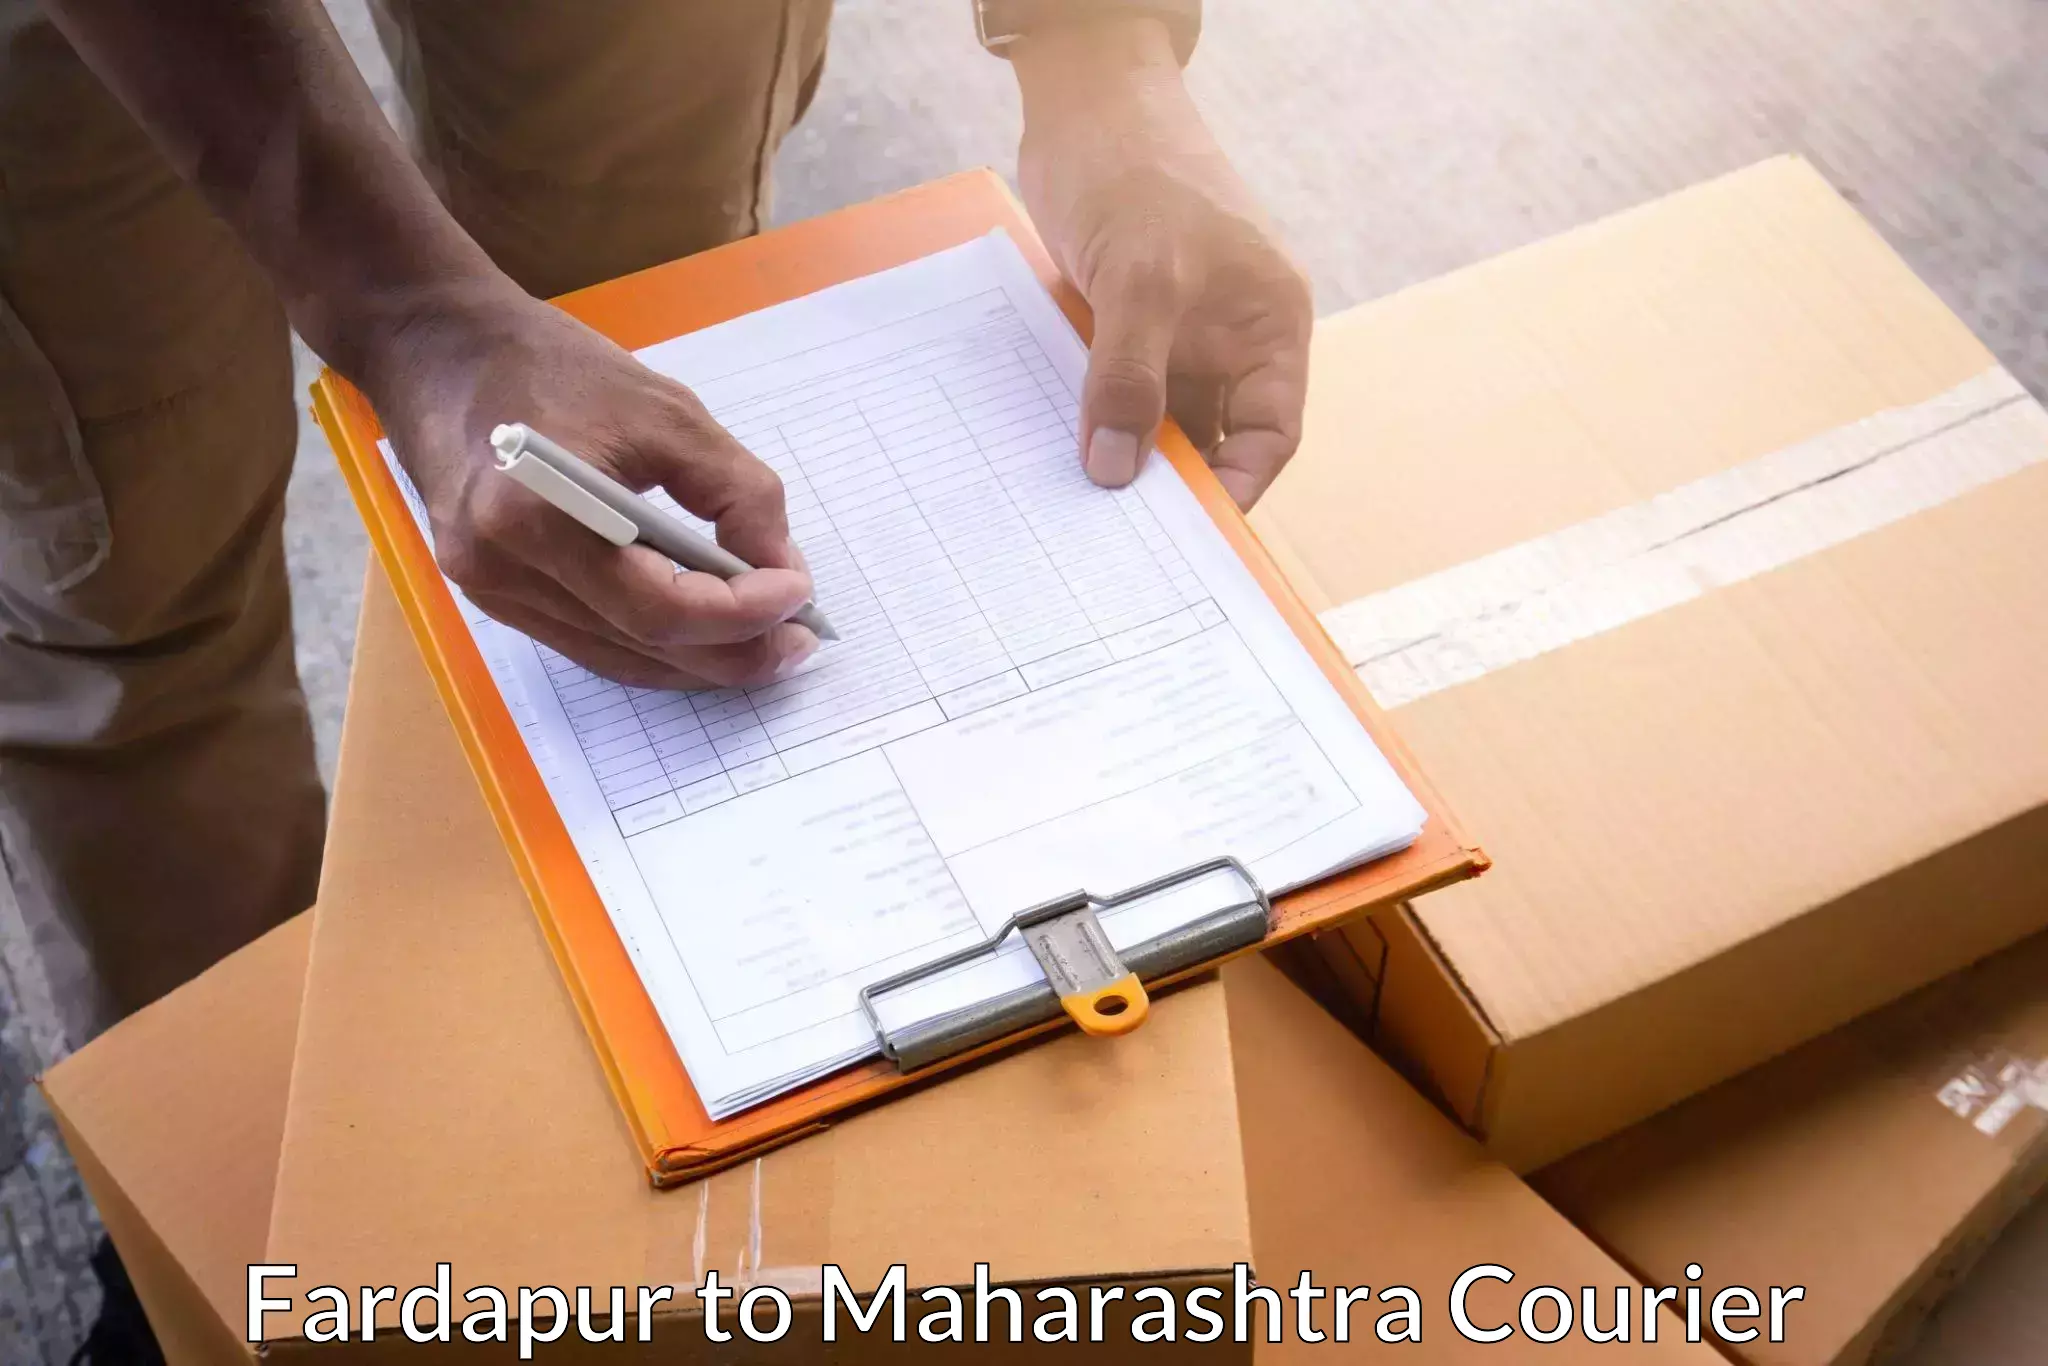 International parcel service Fardapur to Vasai